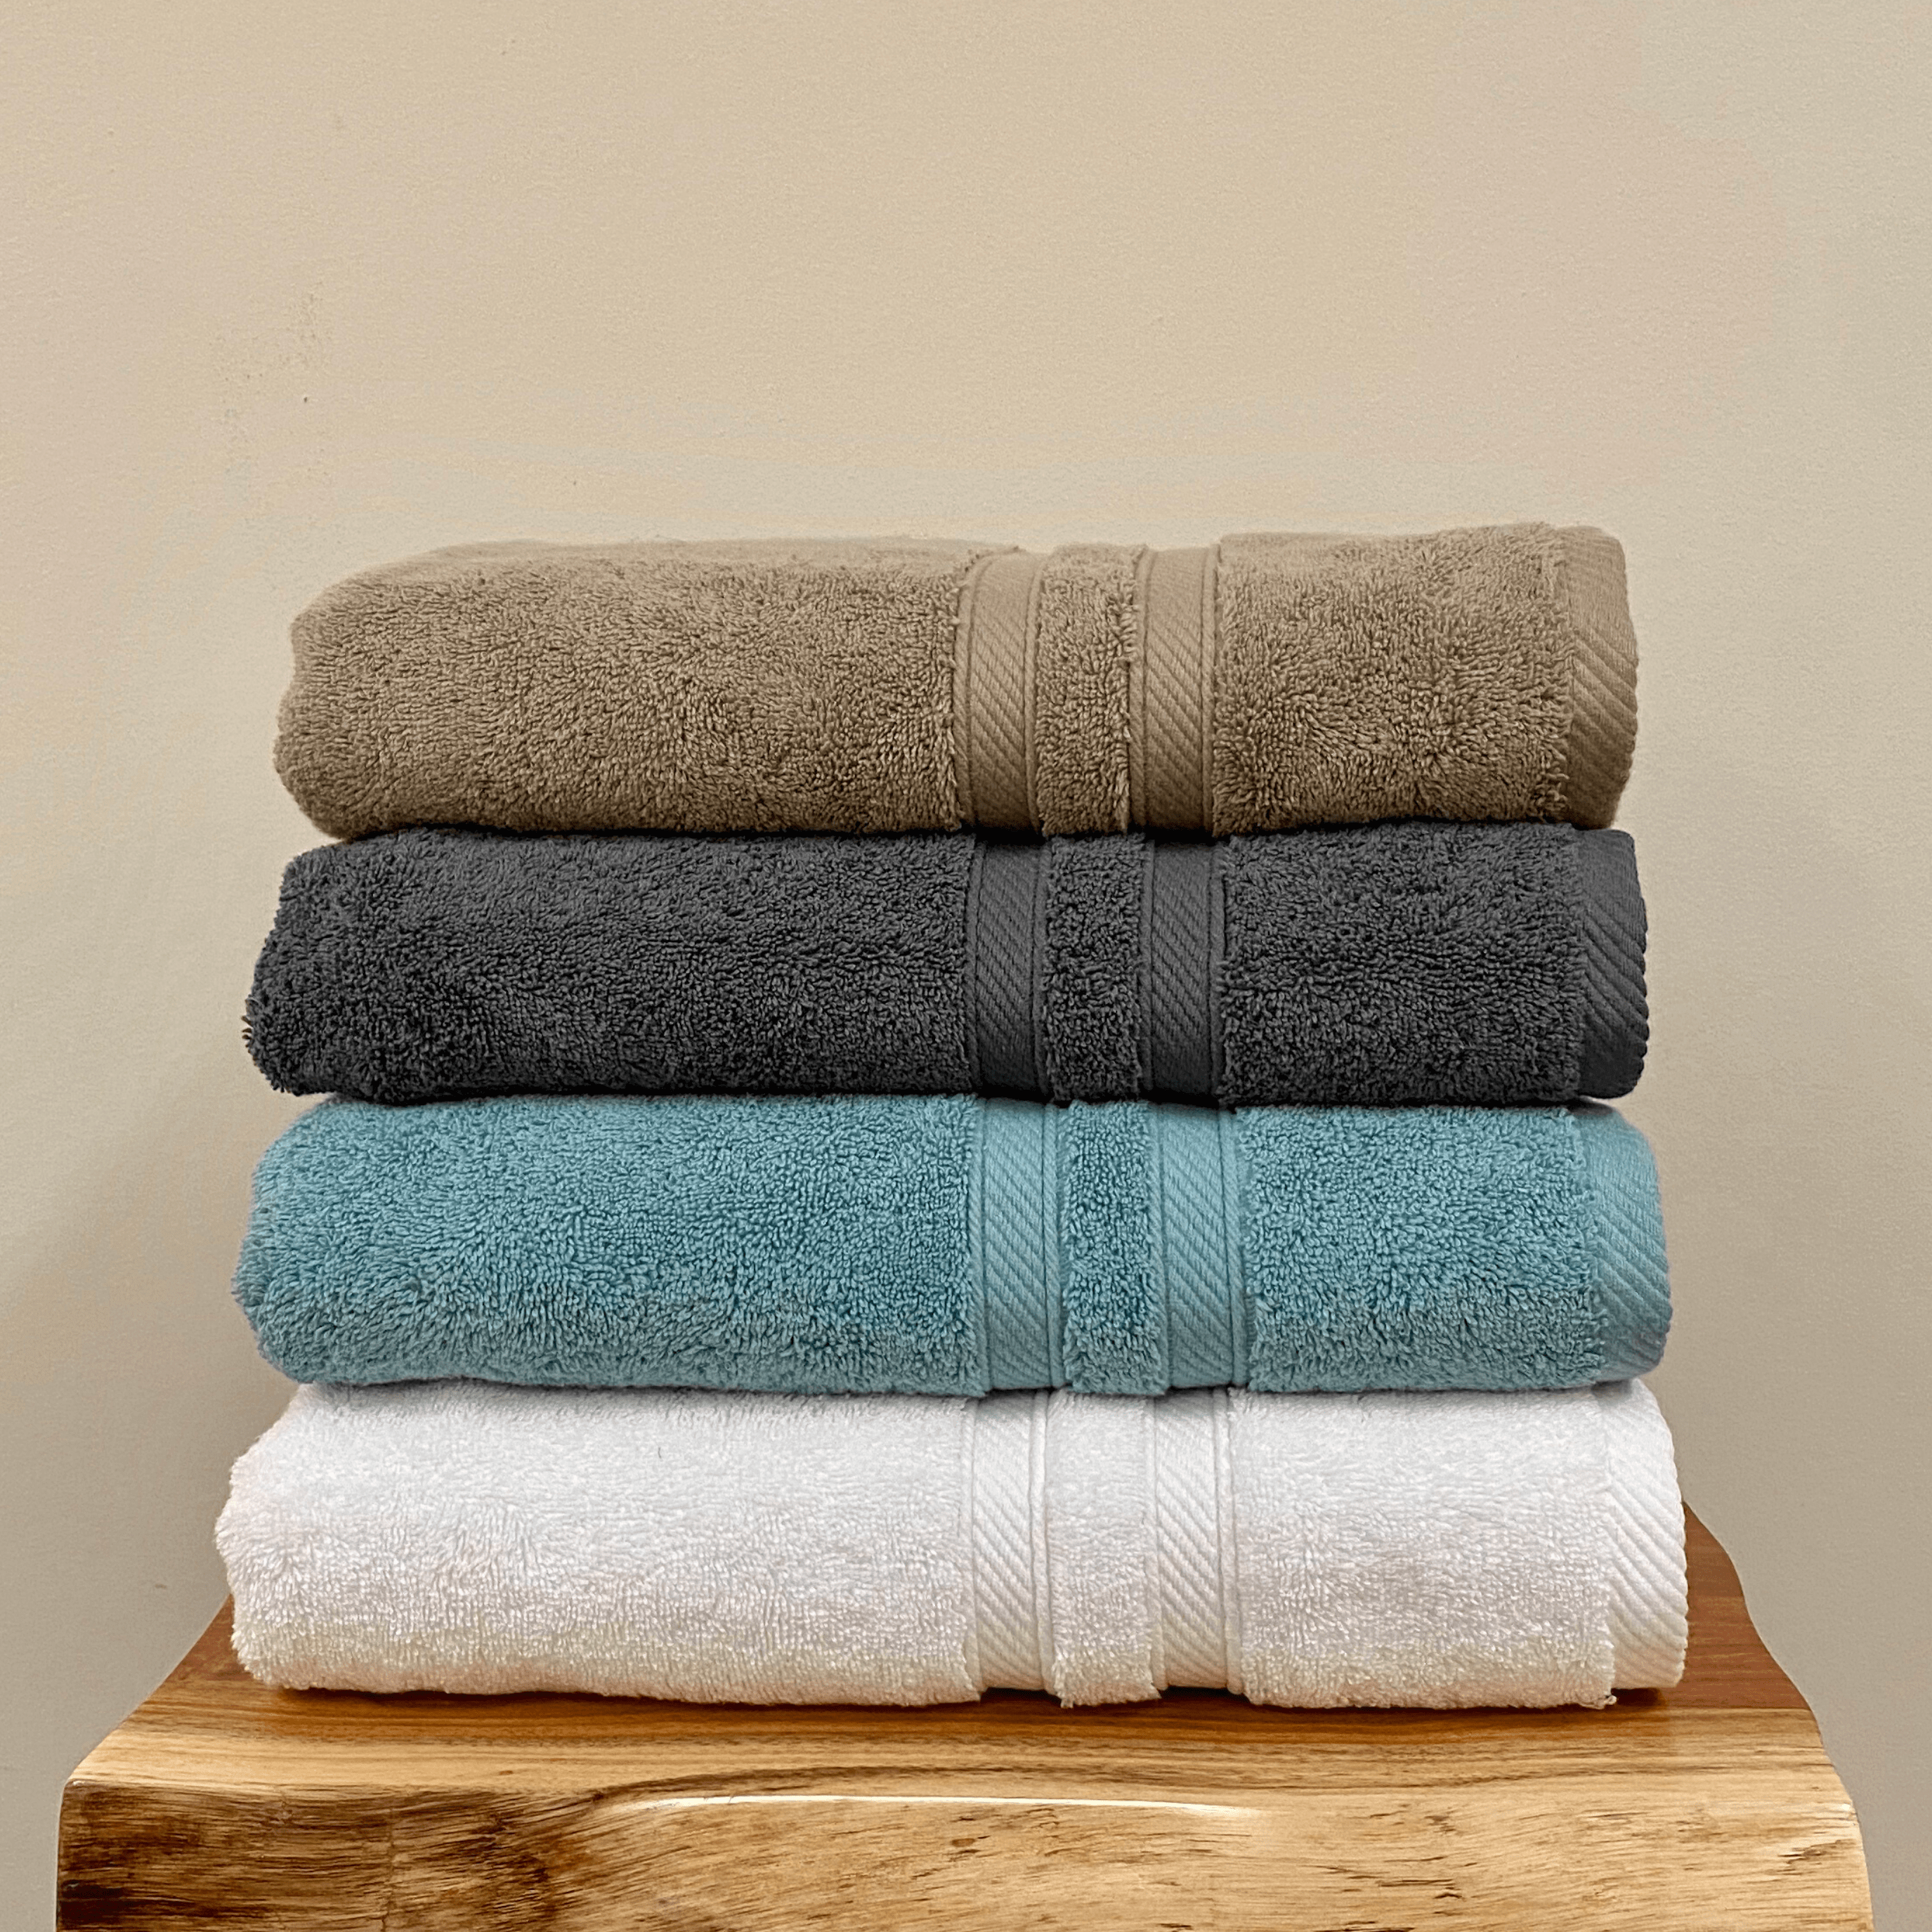 Turkish Cotton Towels Bath Sheets Canada